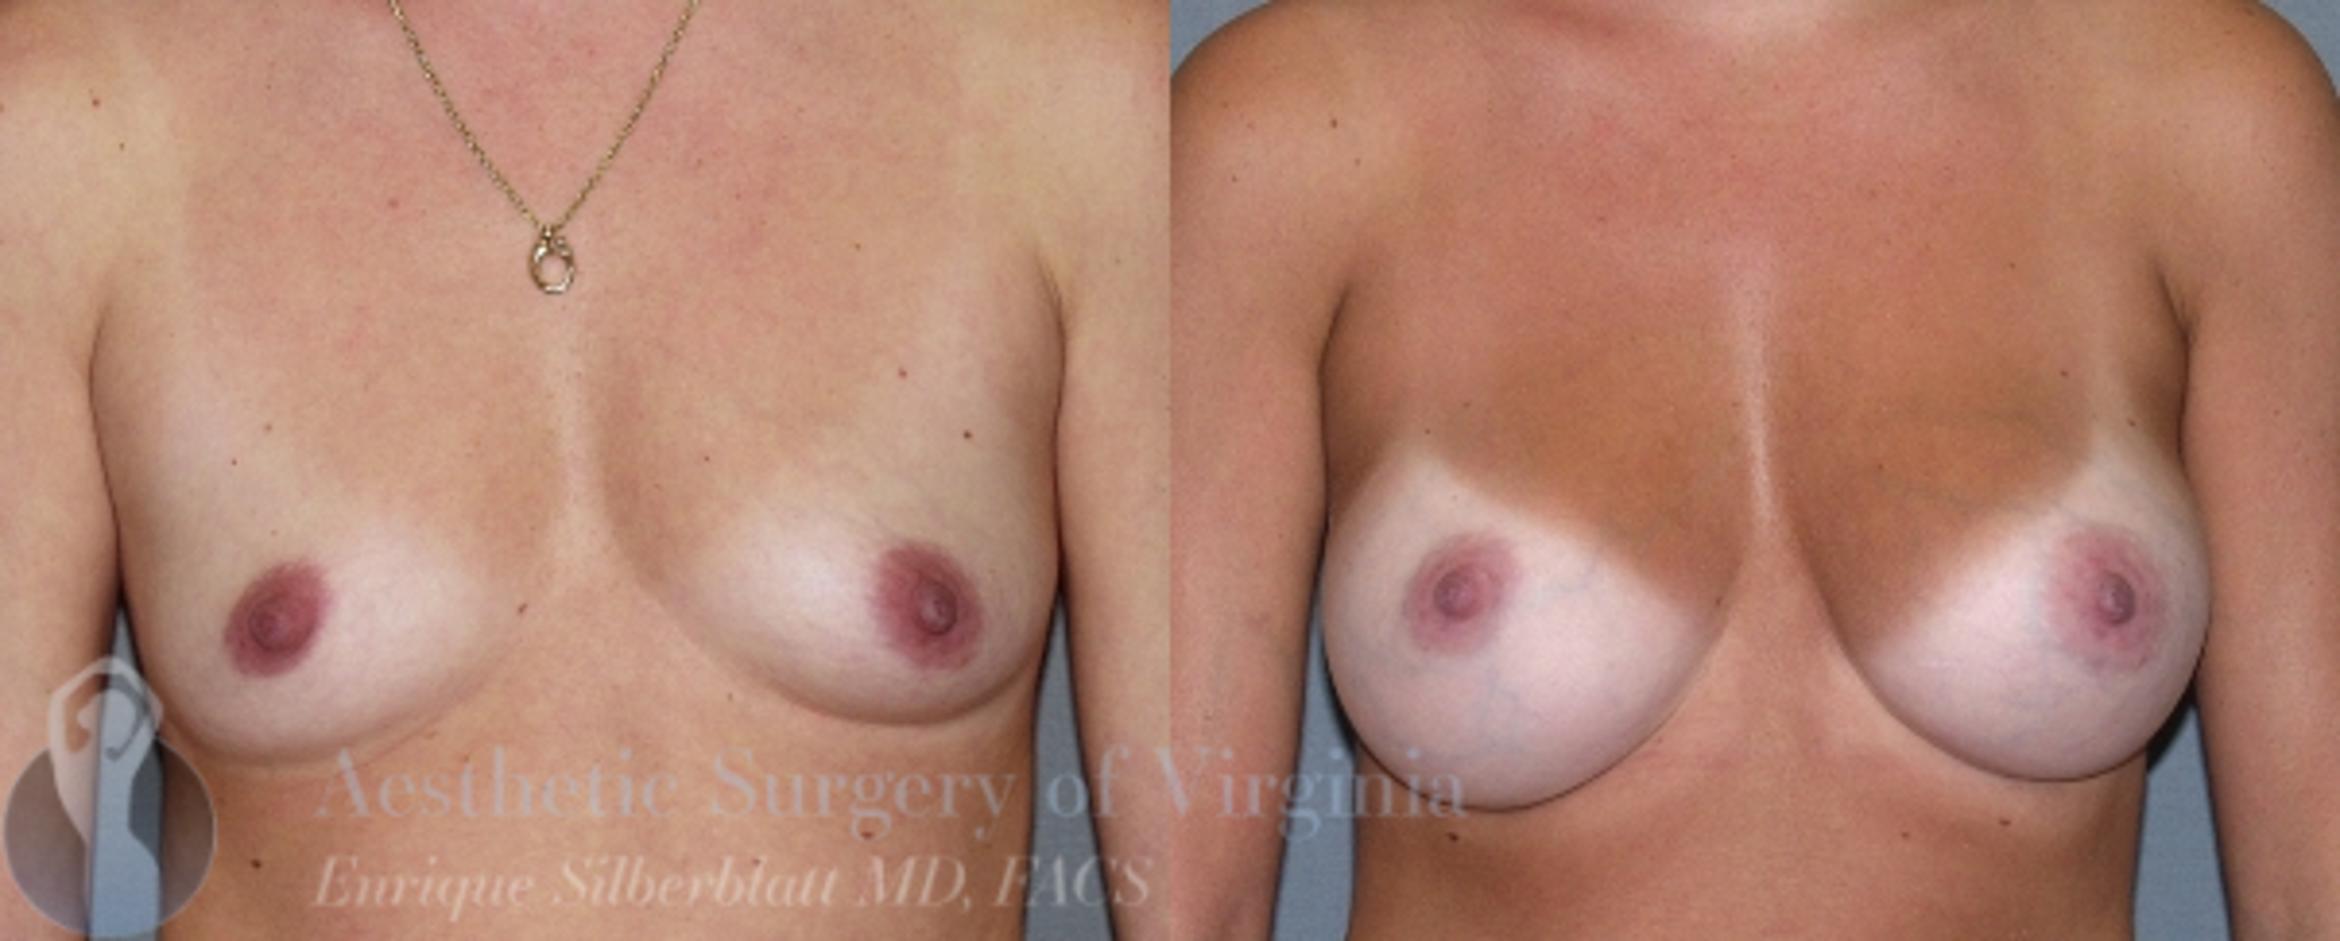 Breast Augmentation Case 6 Before & After View #1 | Roanoke, VA | Aesthetic Surgery of Virginia: Enrique Silberblatt, MD